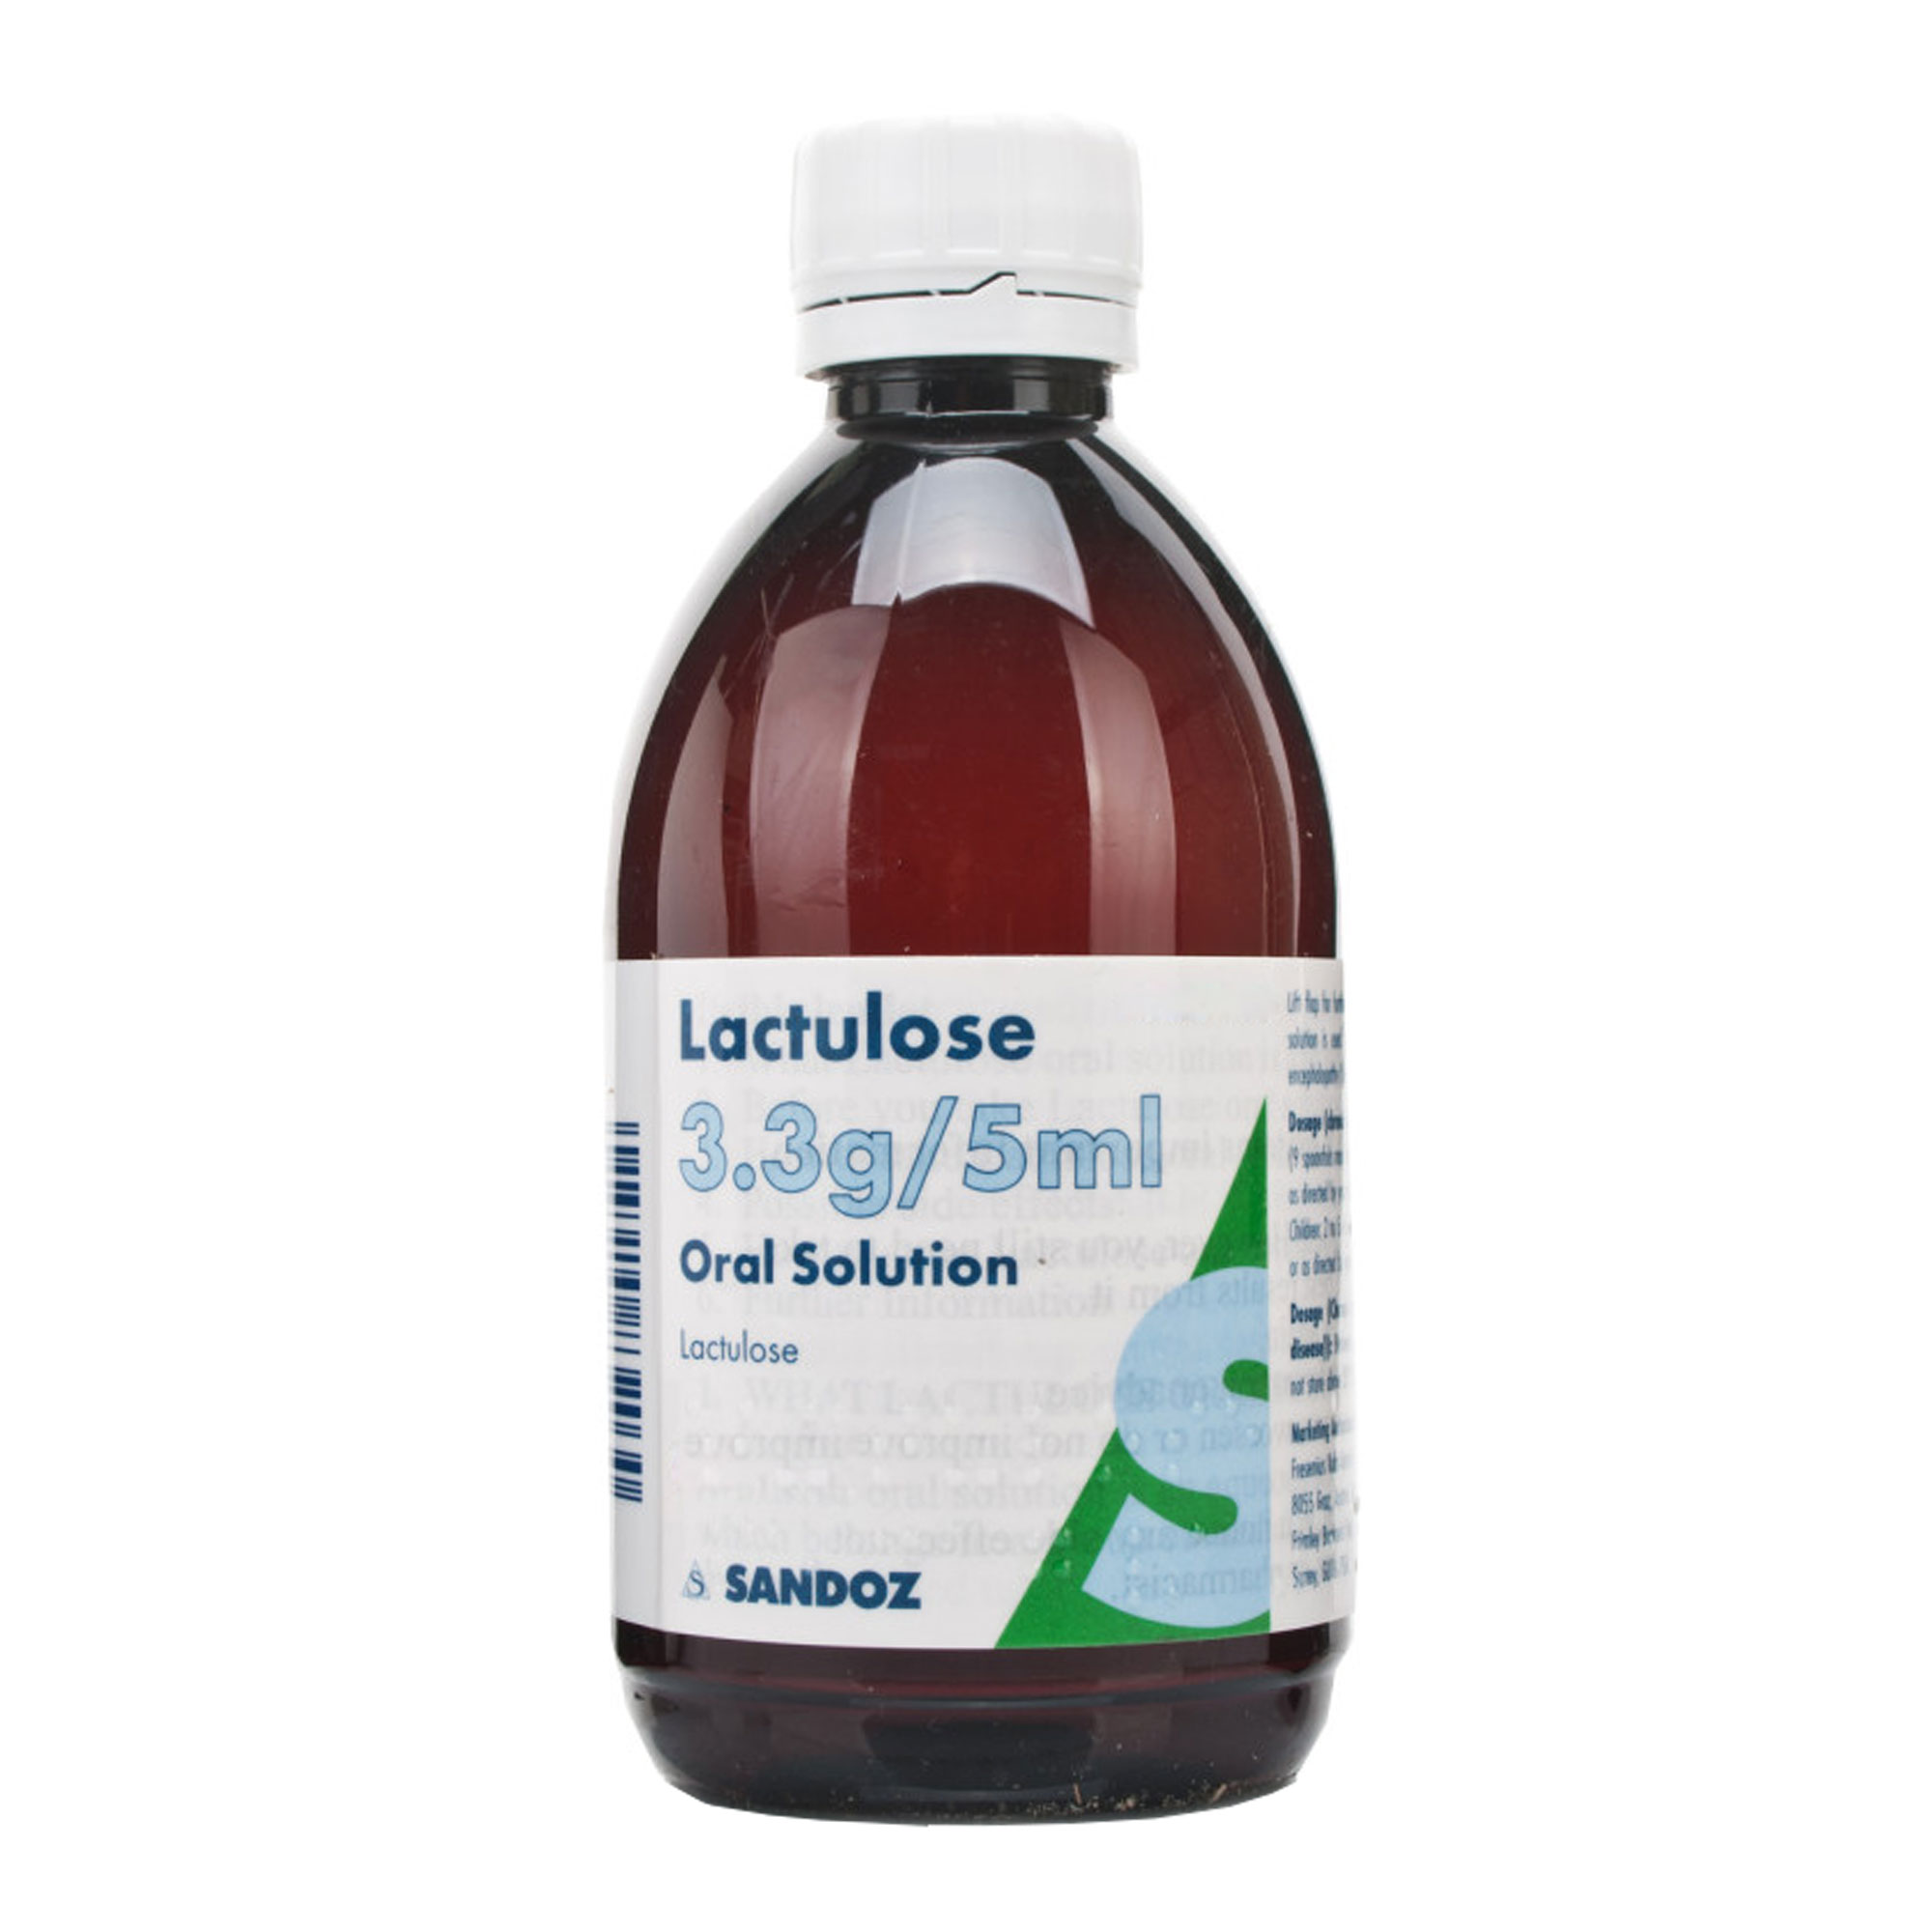 liquid laxative for colonoscopy